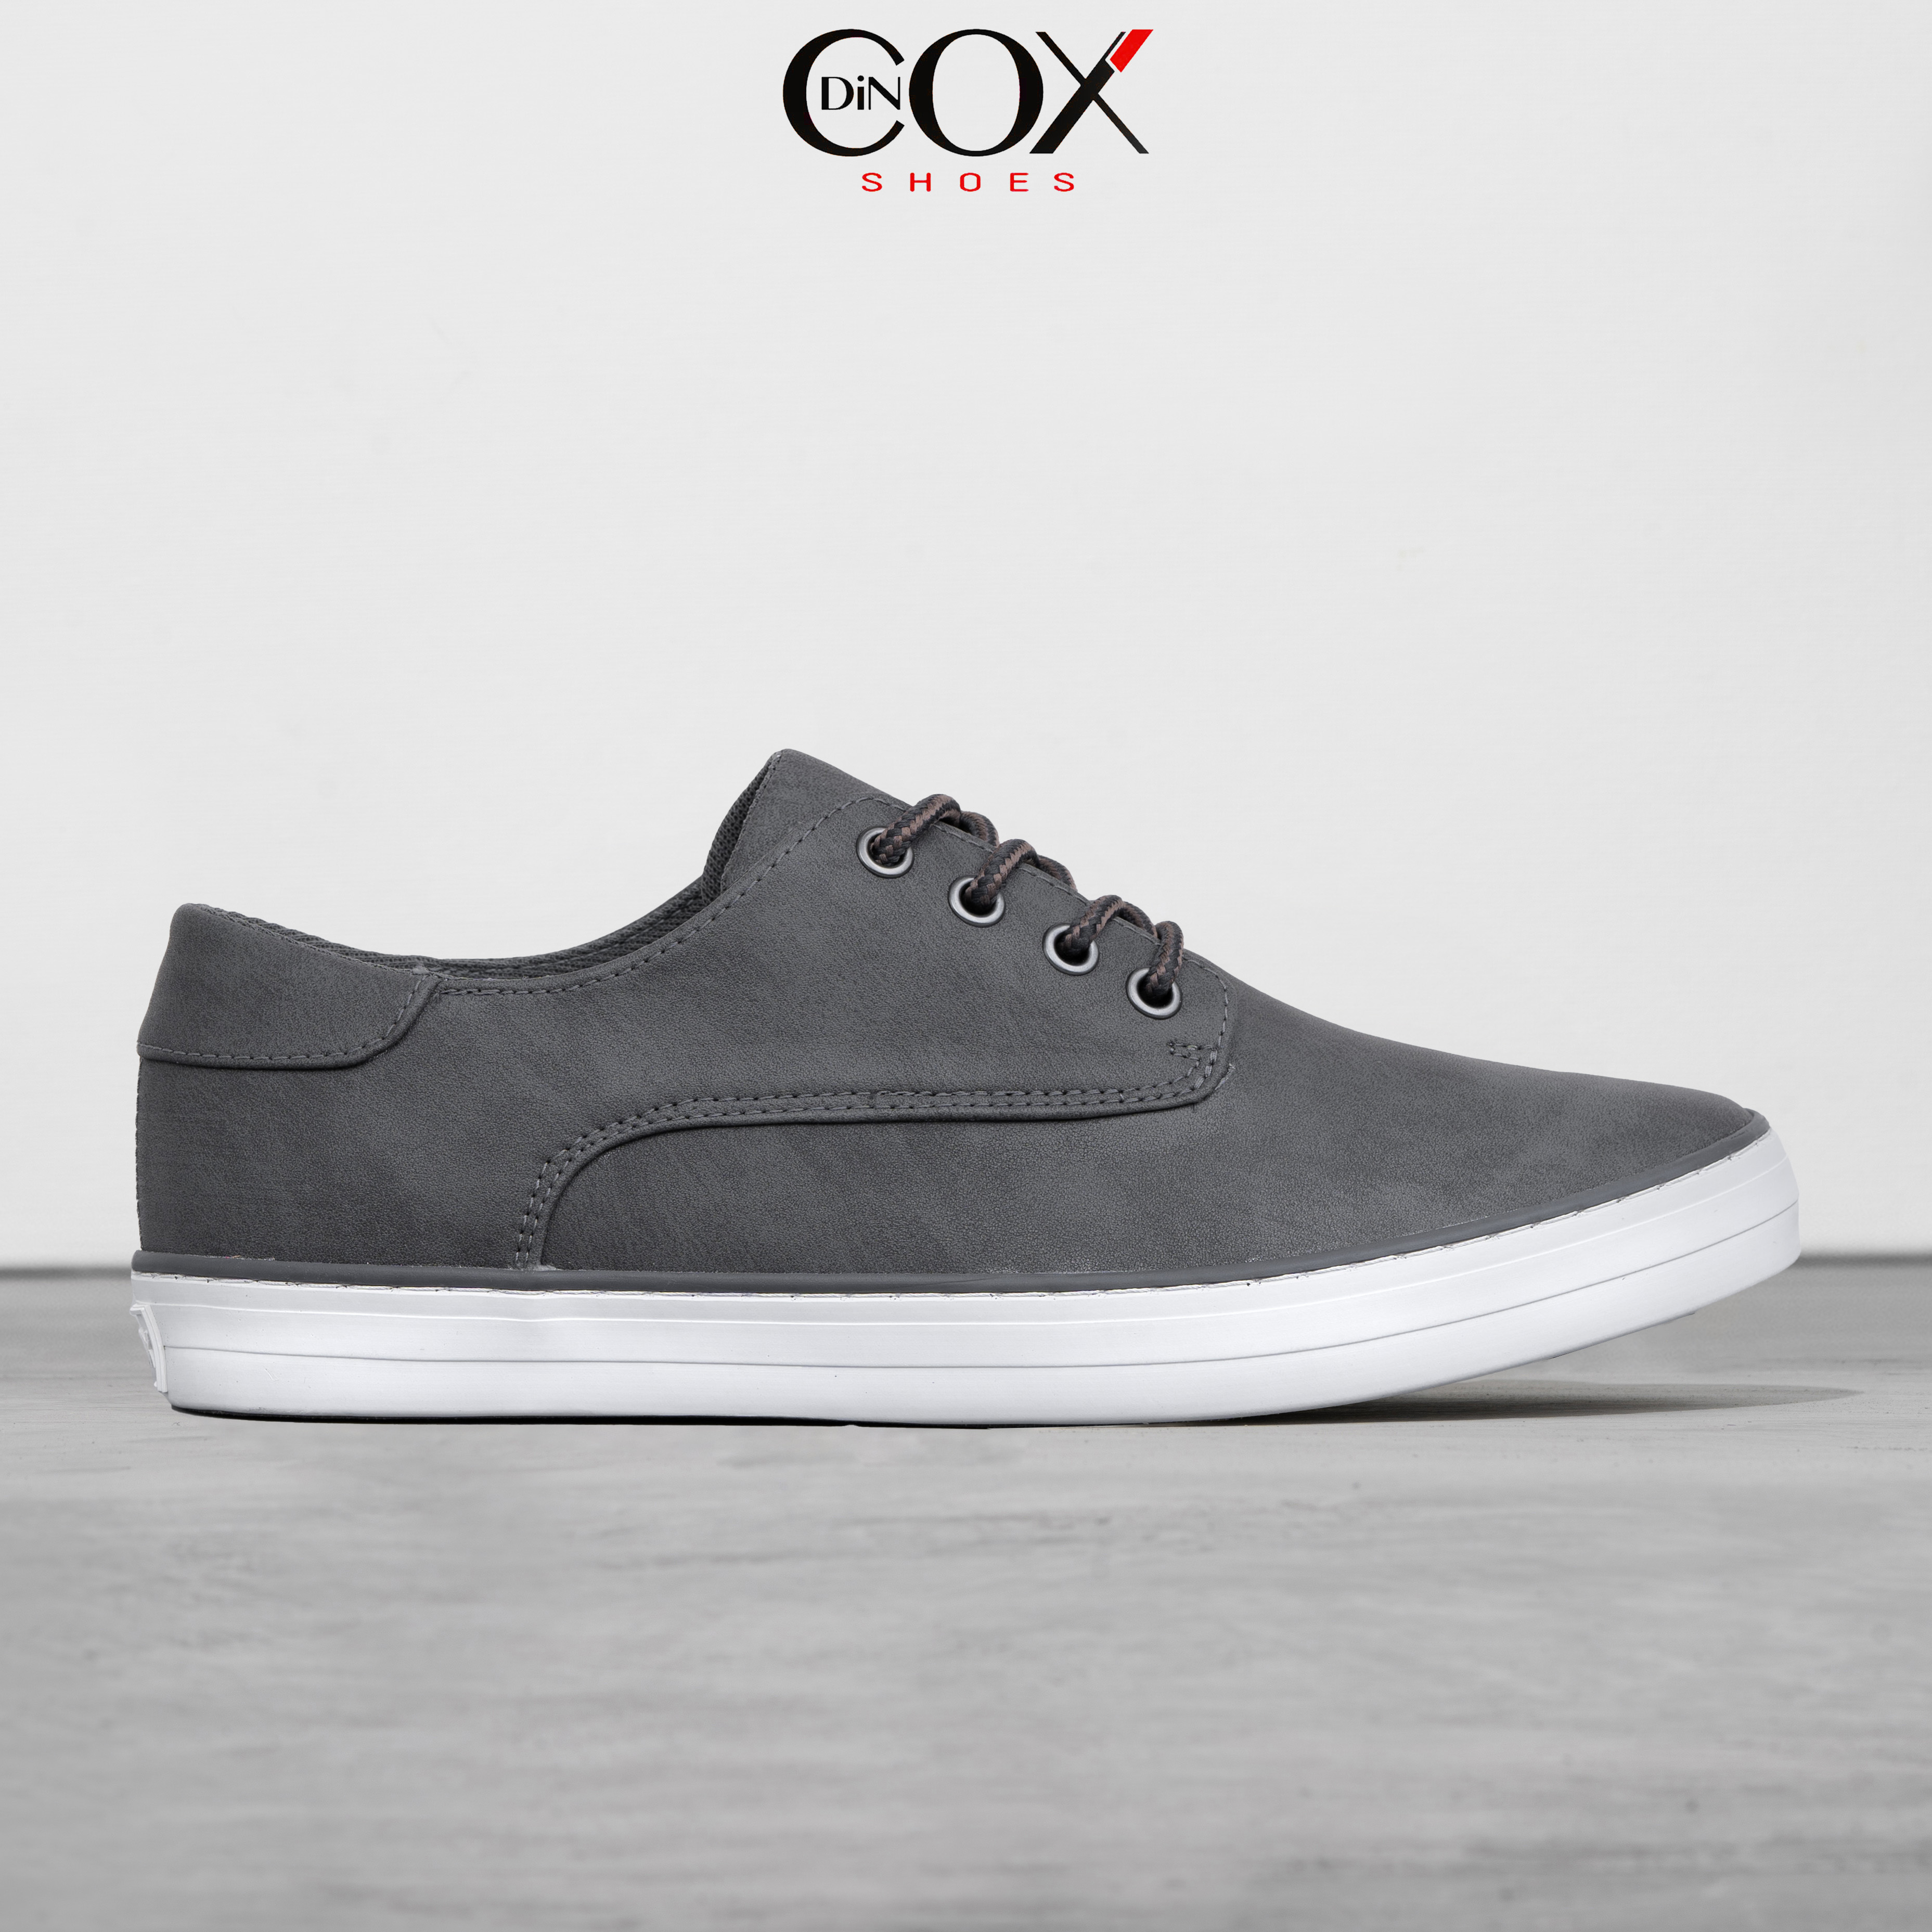 Giày Sneaker Da Nam DINCOX E11 Charcoal Sang Trọng Lịch Thiệp